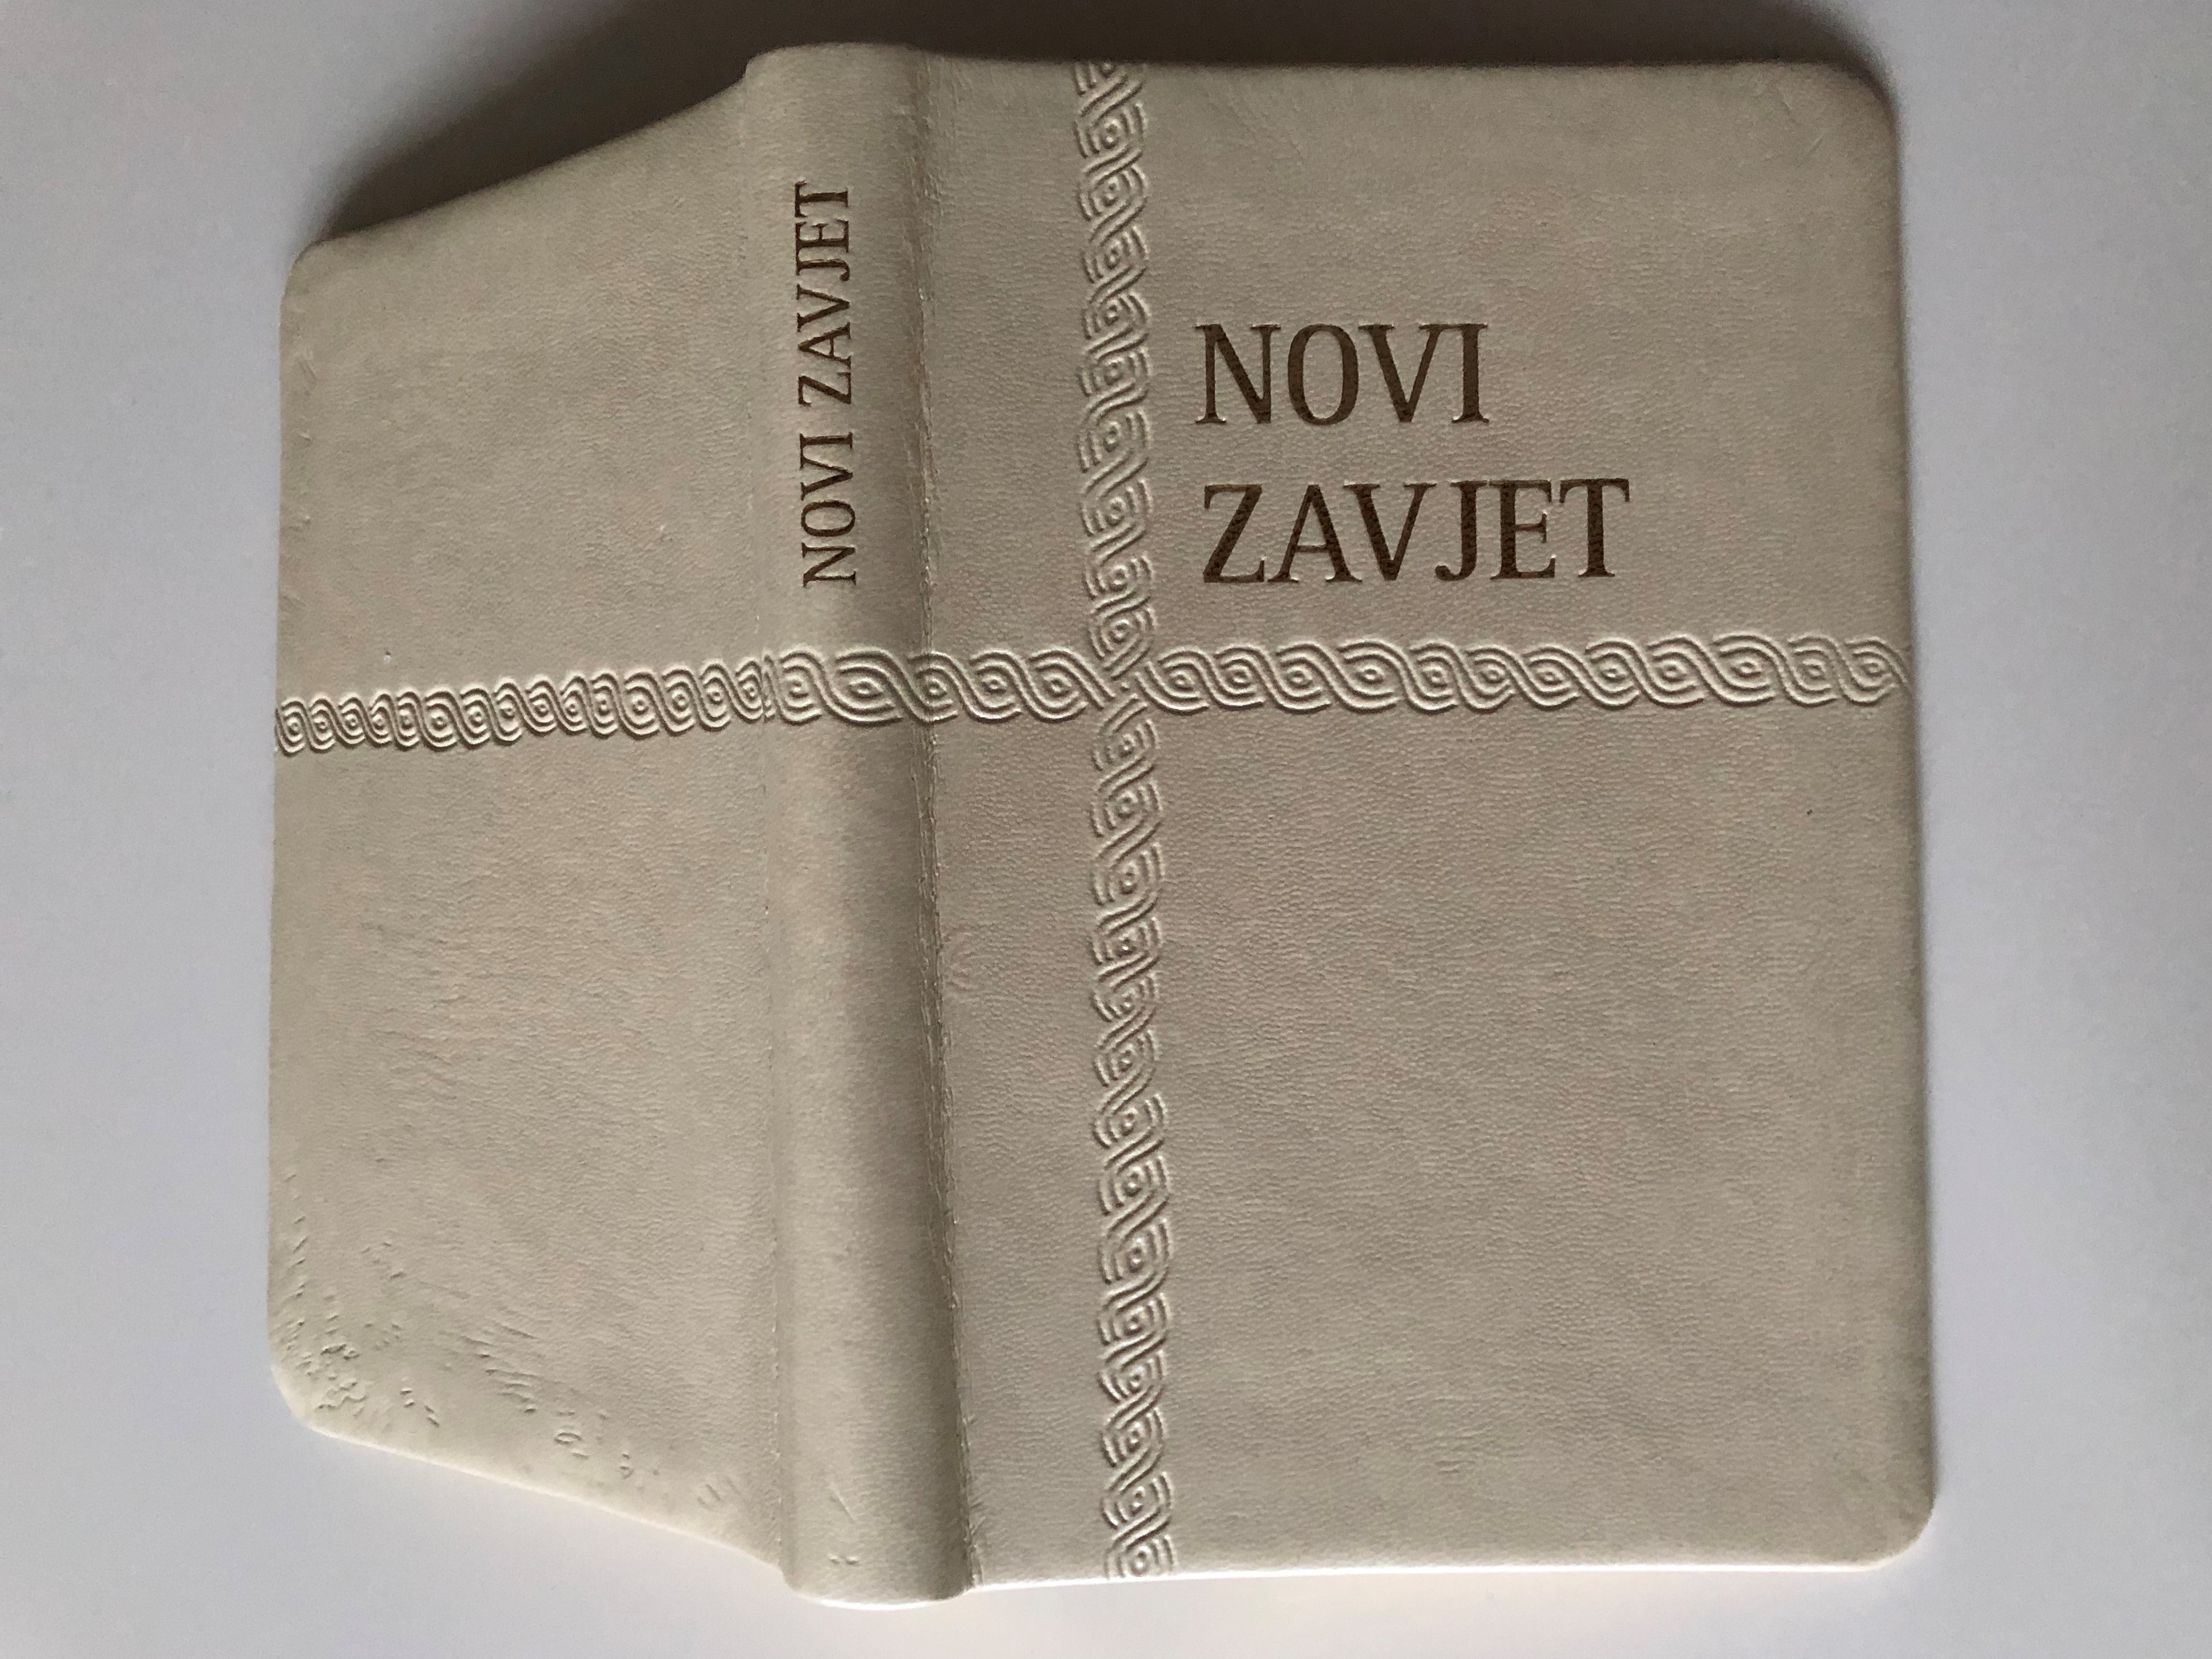 novi-zavjet-new-testament-in-croatian-language-white-leather-bound-golden-edges-13a-.jpg